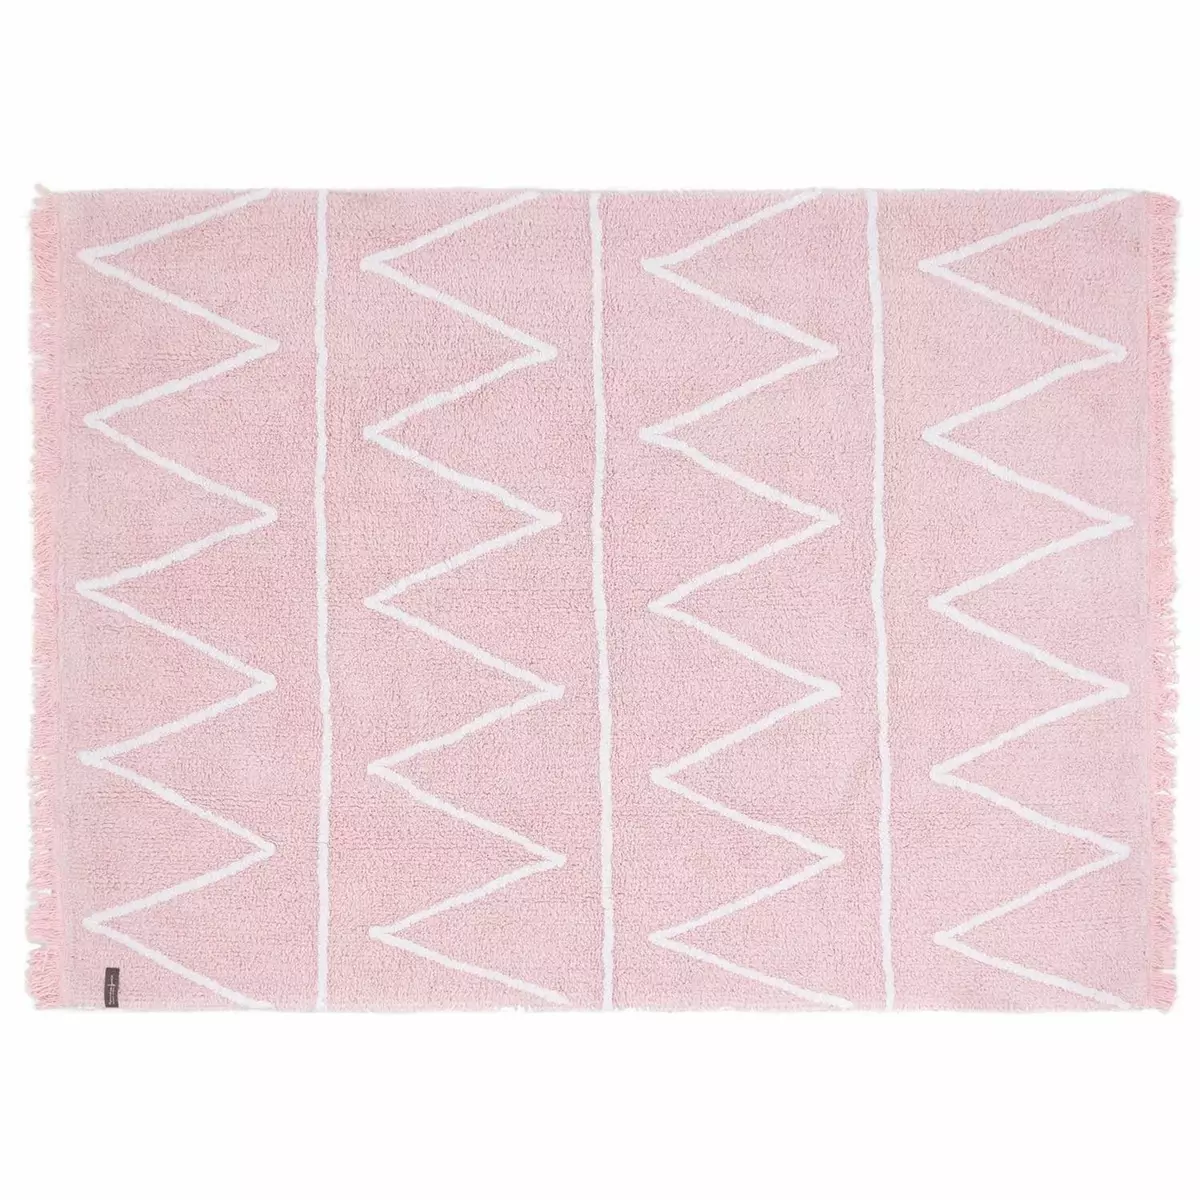 Lorena Canals Tapis coton motif Z - rose - 120 x 160